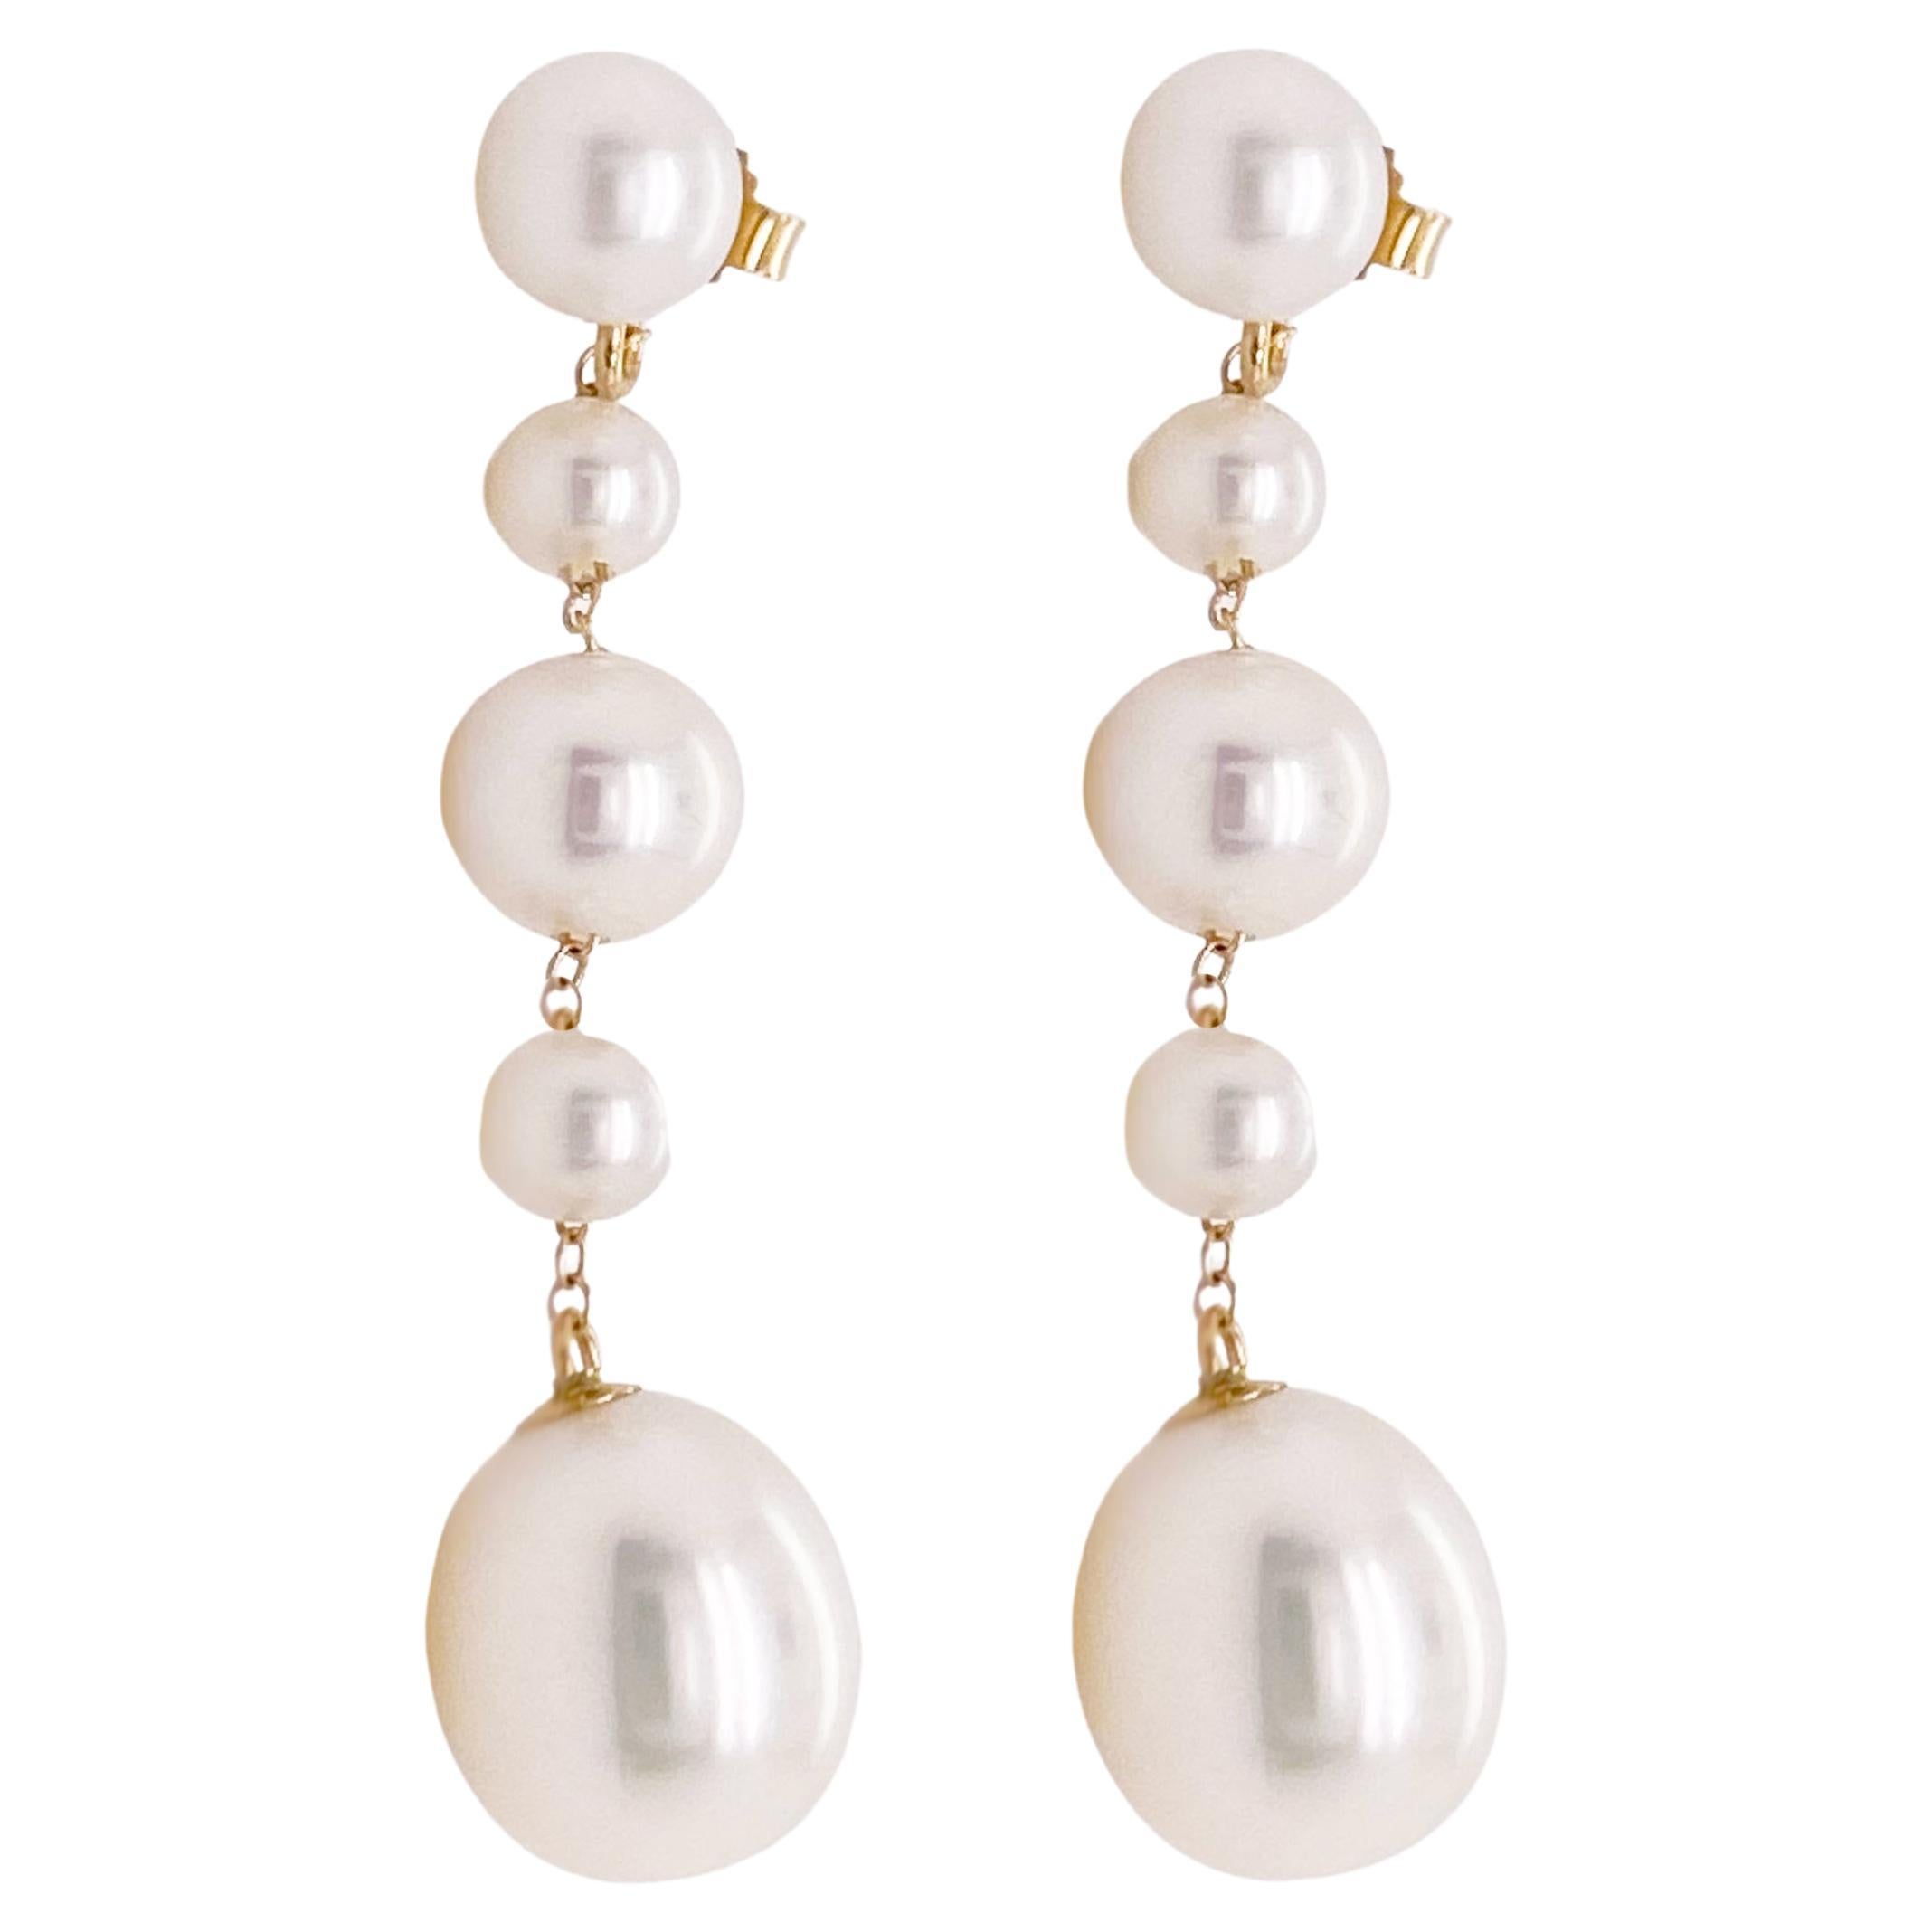 Wedding Pearl Earrings, 5 Pearls w 14 K Gold Between, Wedding Statement Earrings